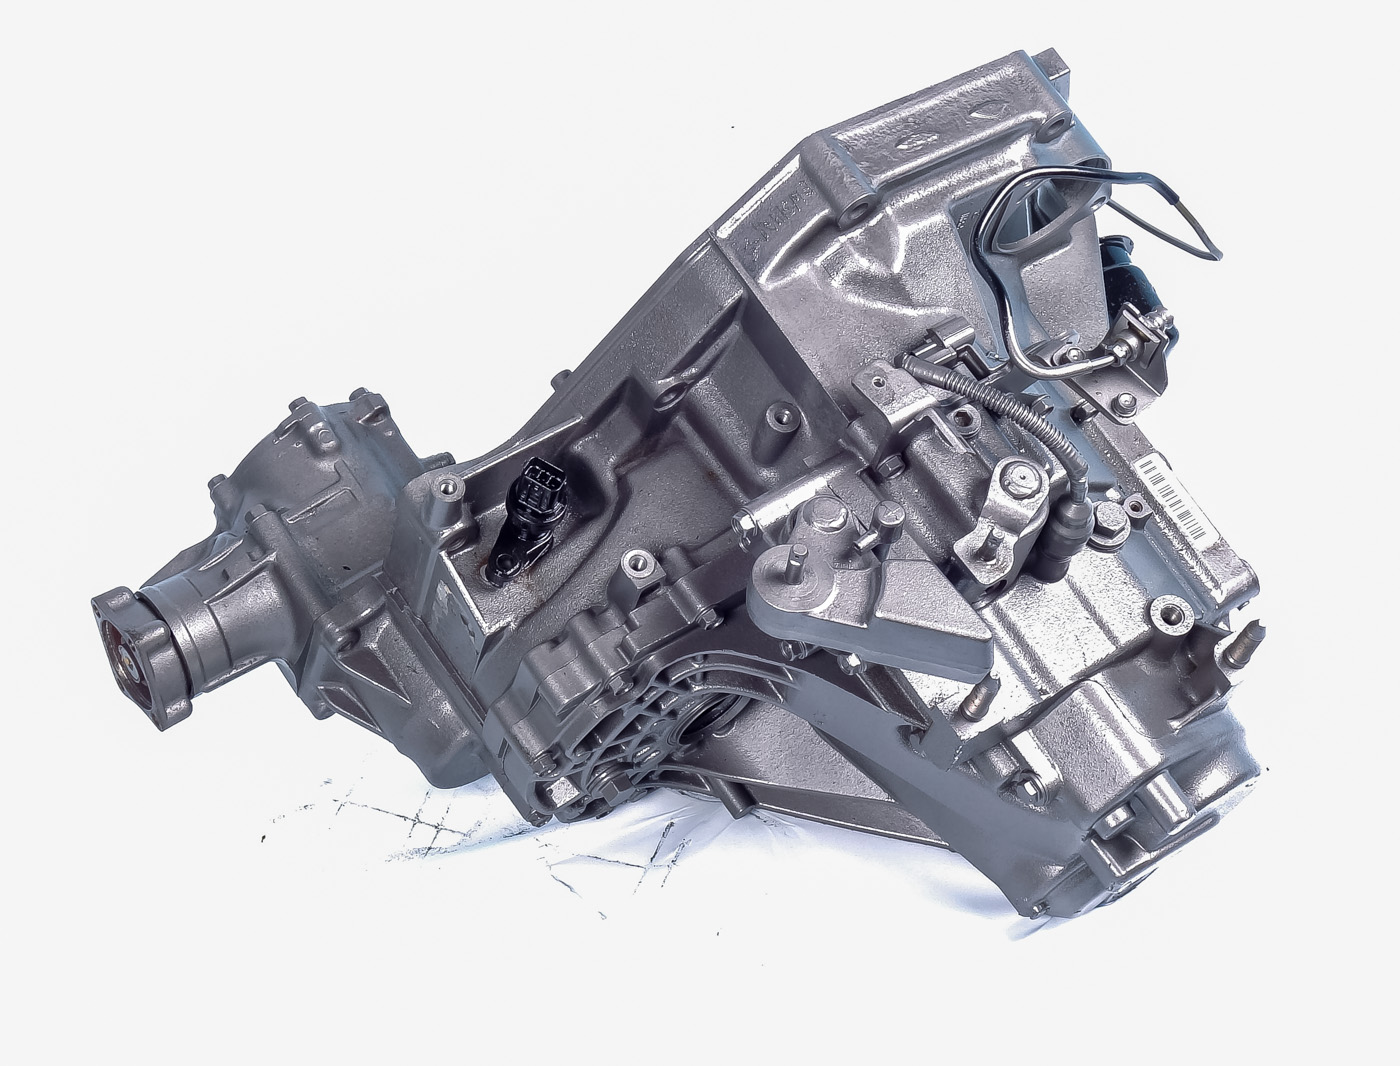 Honda crv manual transmission problems